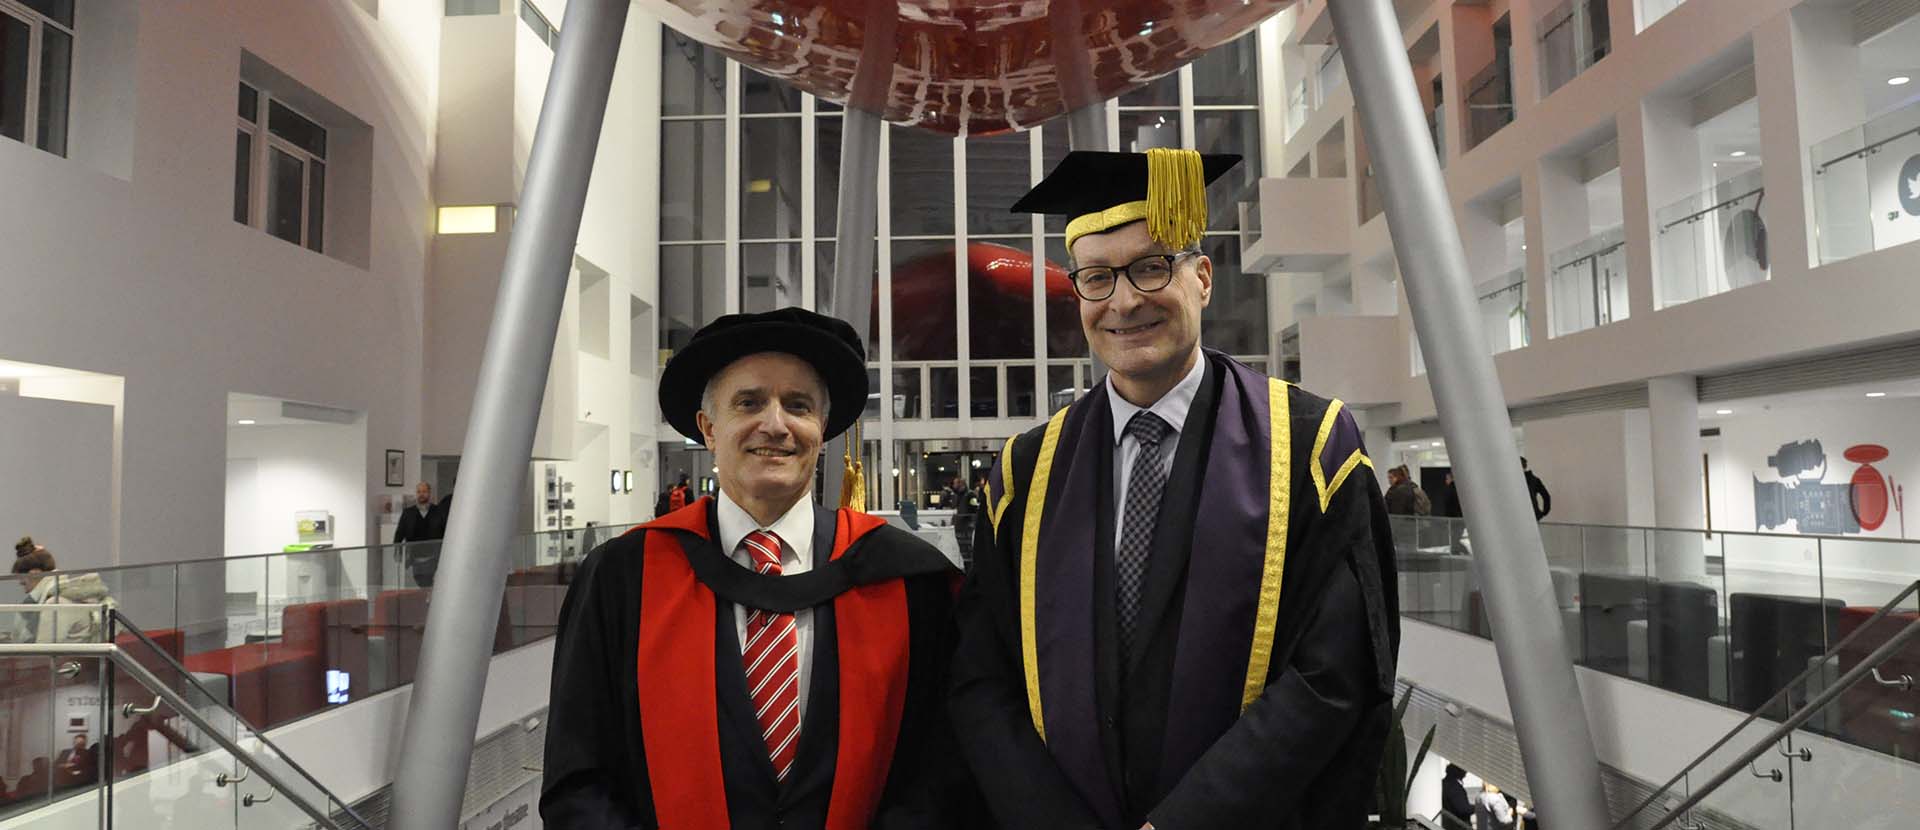 Professor Mike Wilkinson and Vice-Chancellor Graham Baldwin